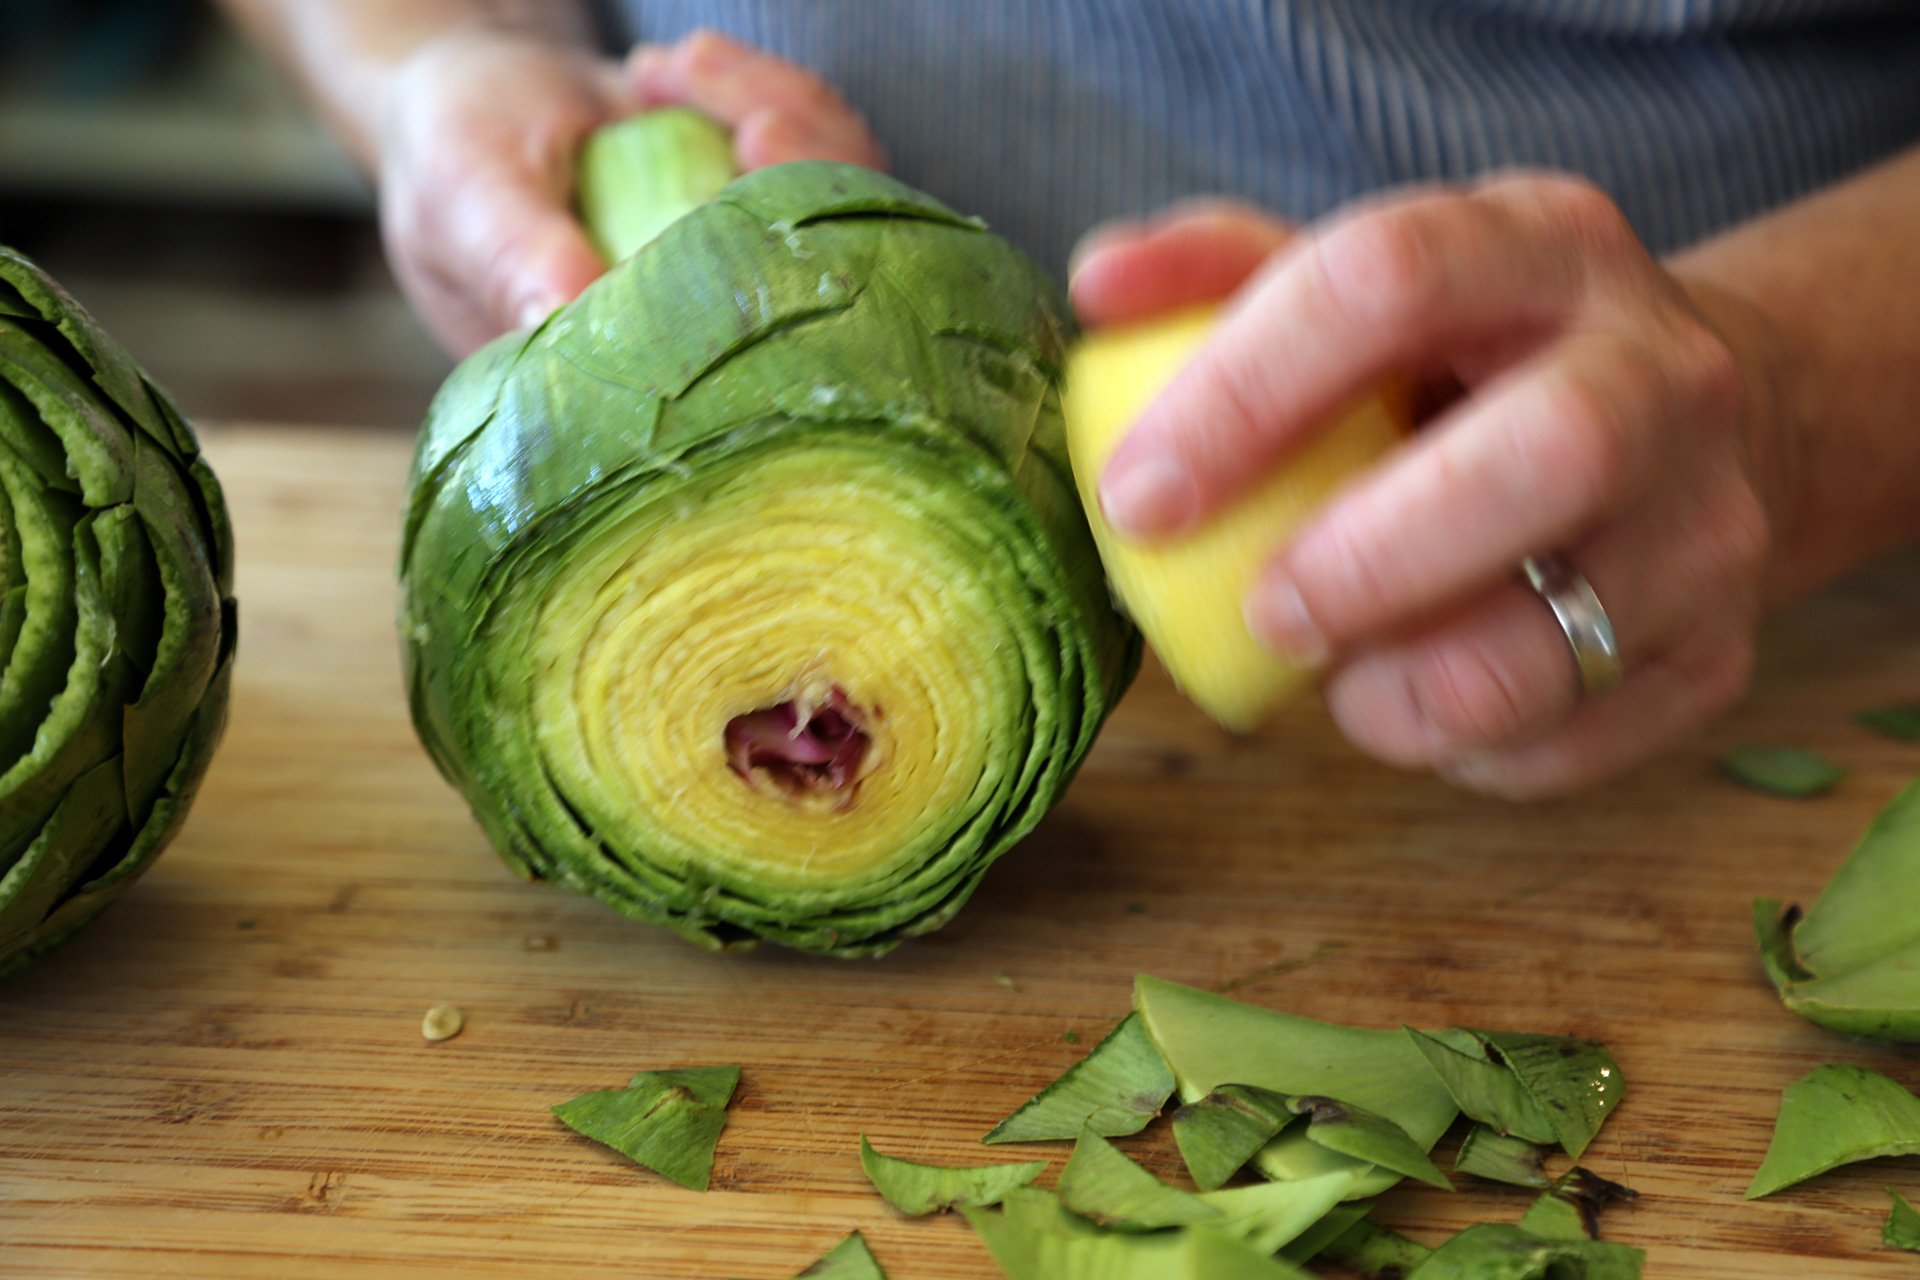 As you trim the artichoke, rub the cut areas with the lemon.